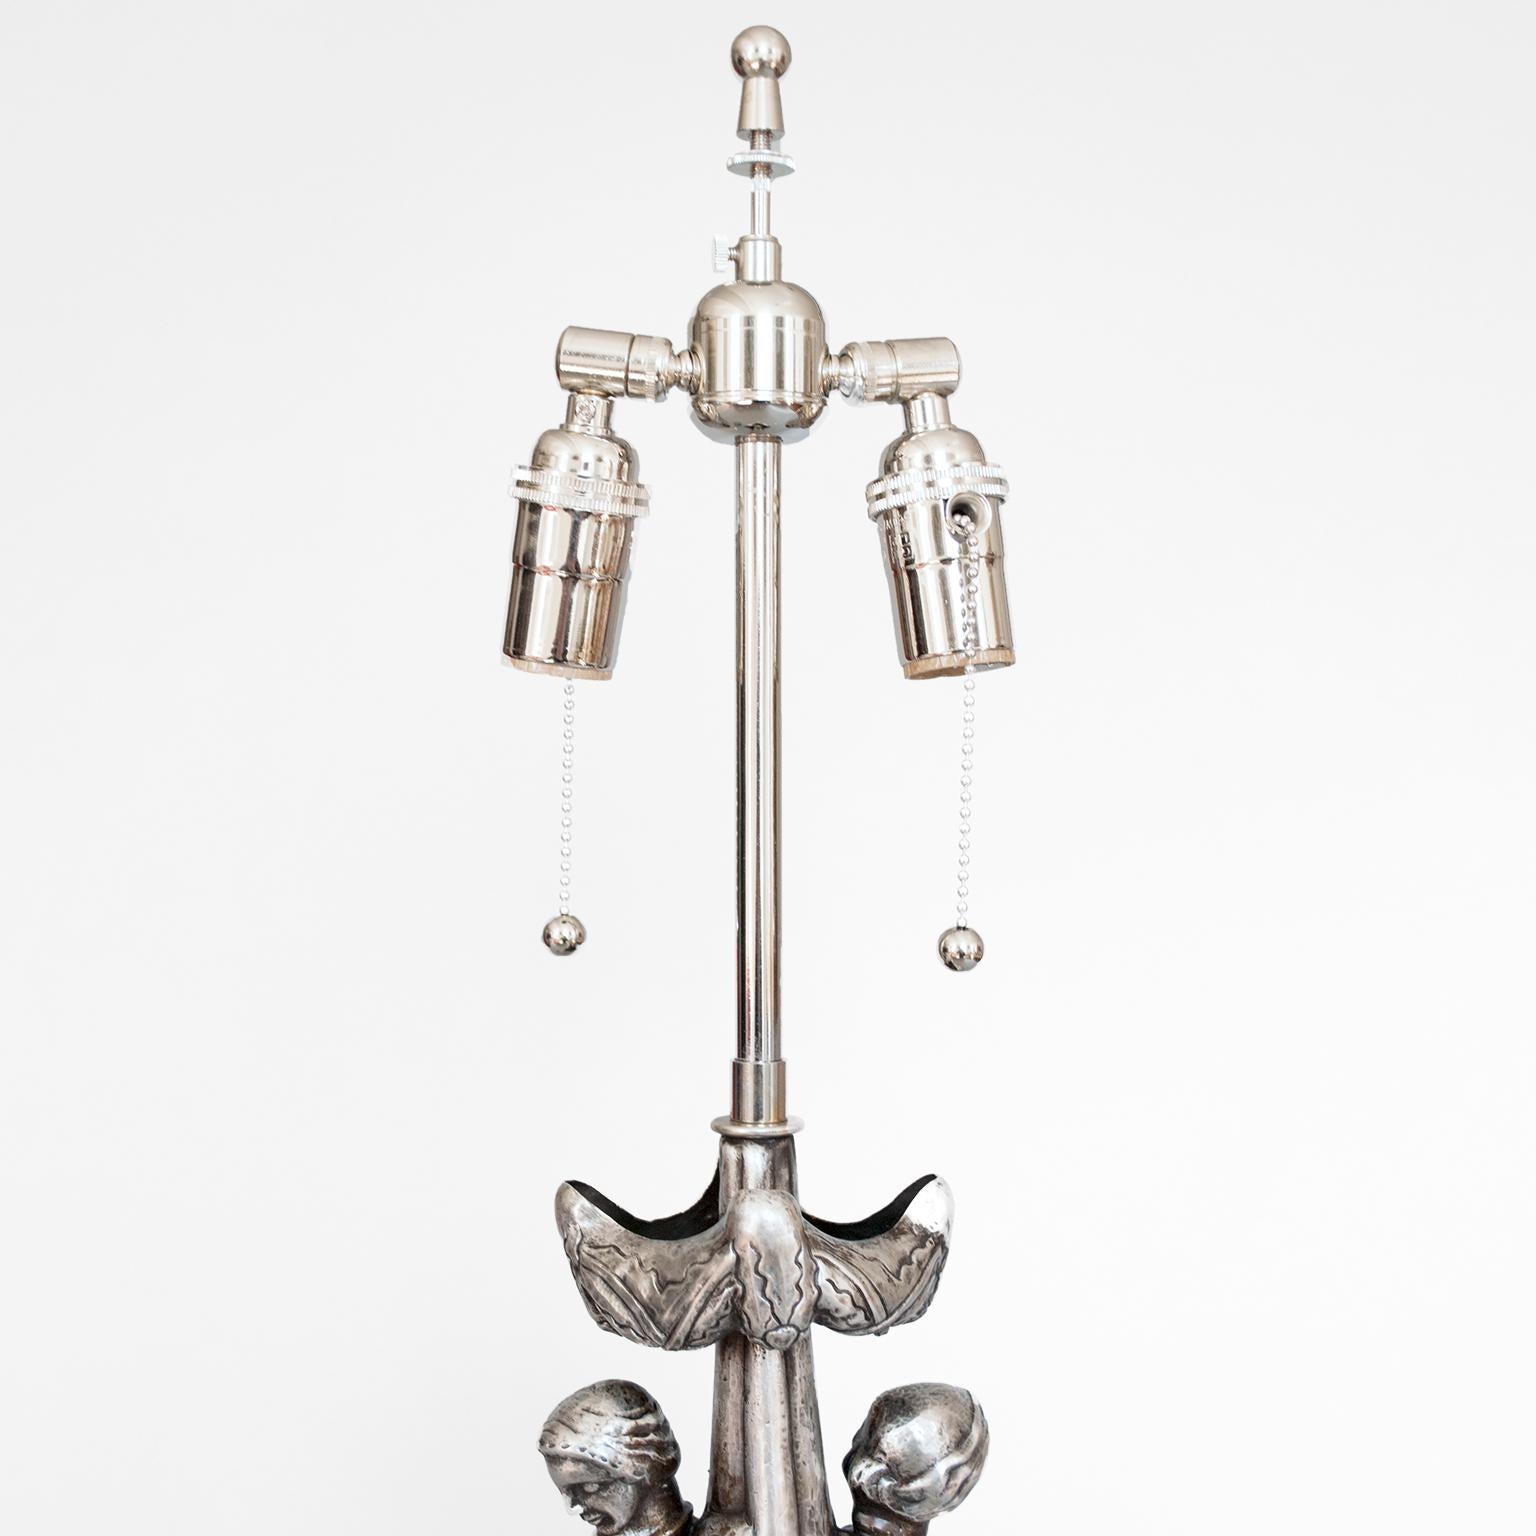 20th Century Per Torndahl Swedish Art Deco Silver Plated Lamp for Atelier Torndahl.